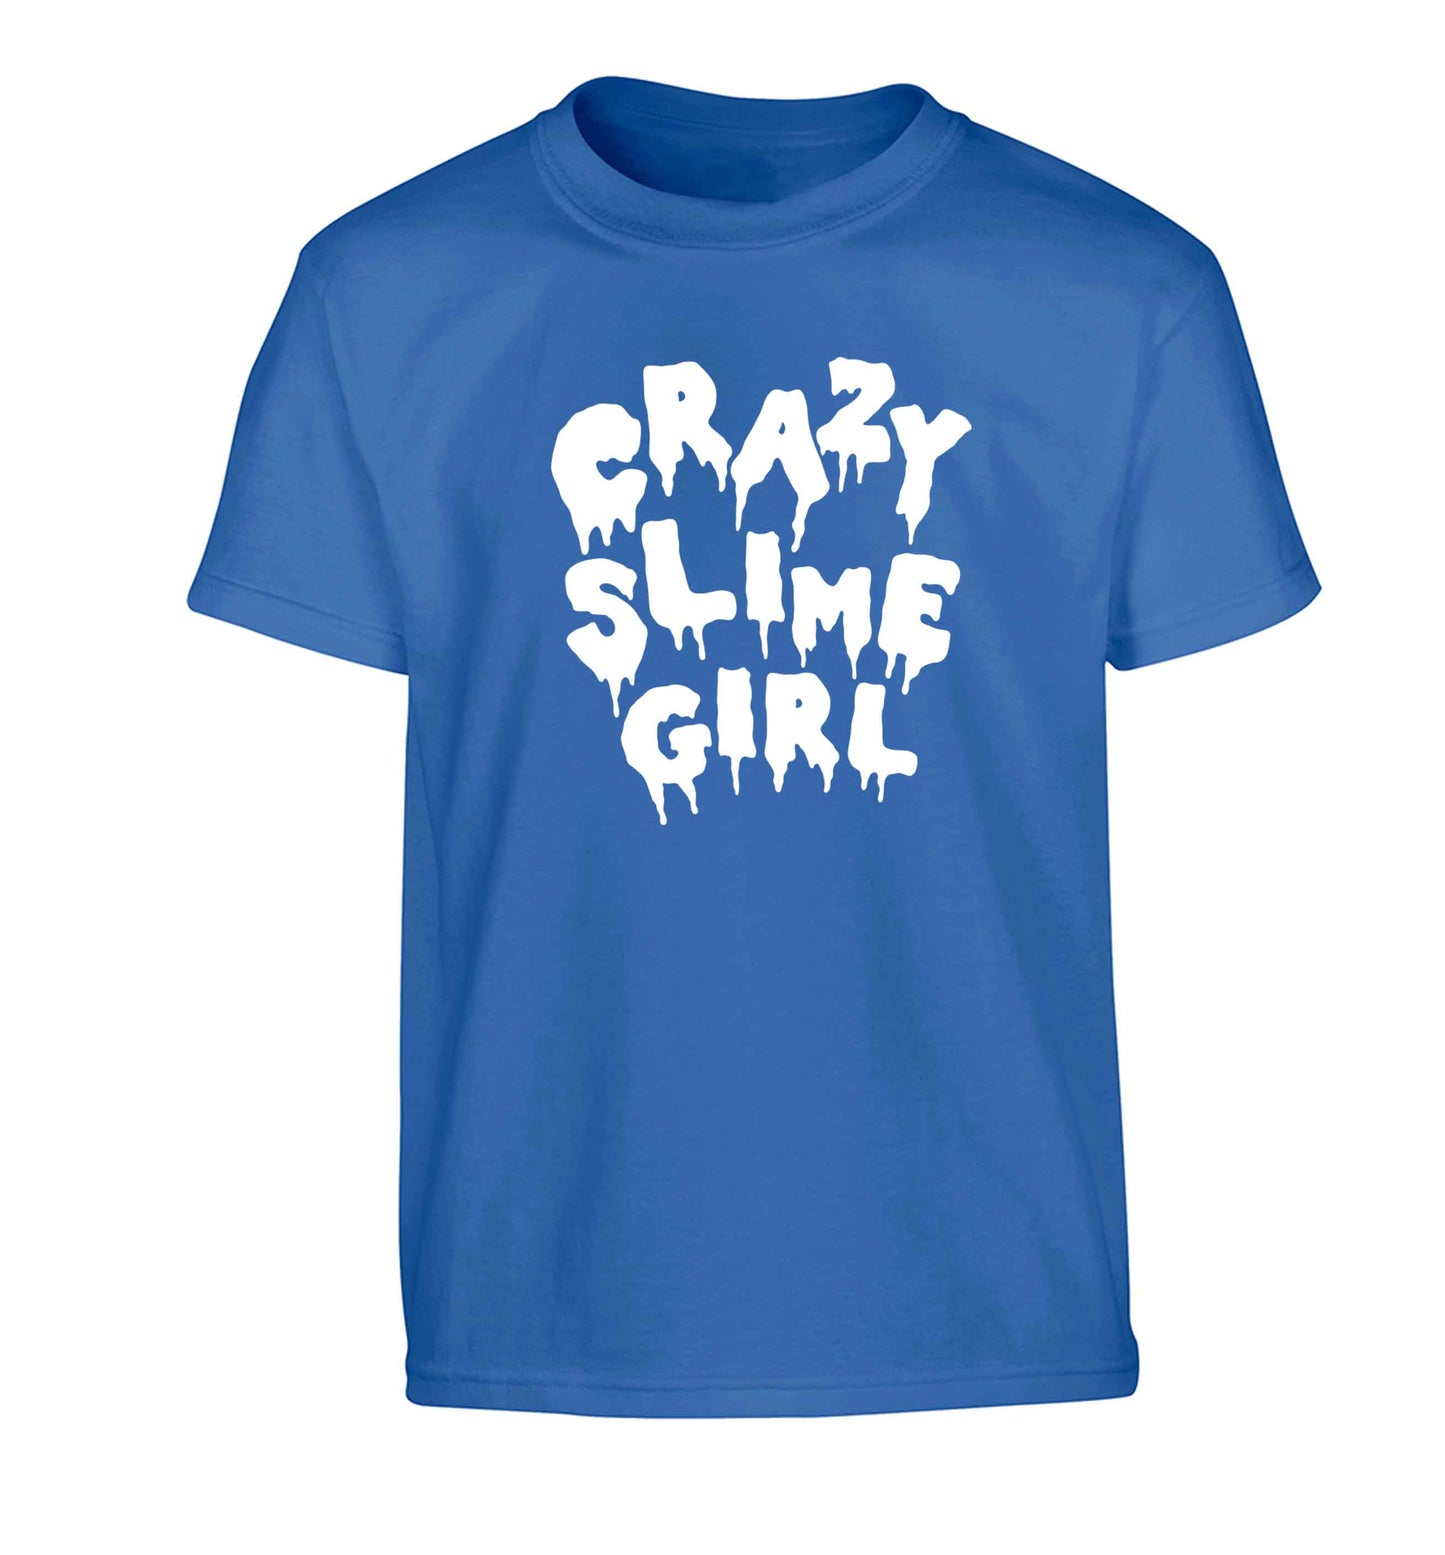 Crazy slime girl Children's blue Tshirt 12-13 Years